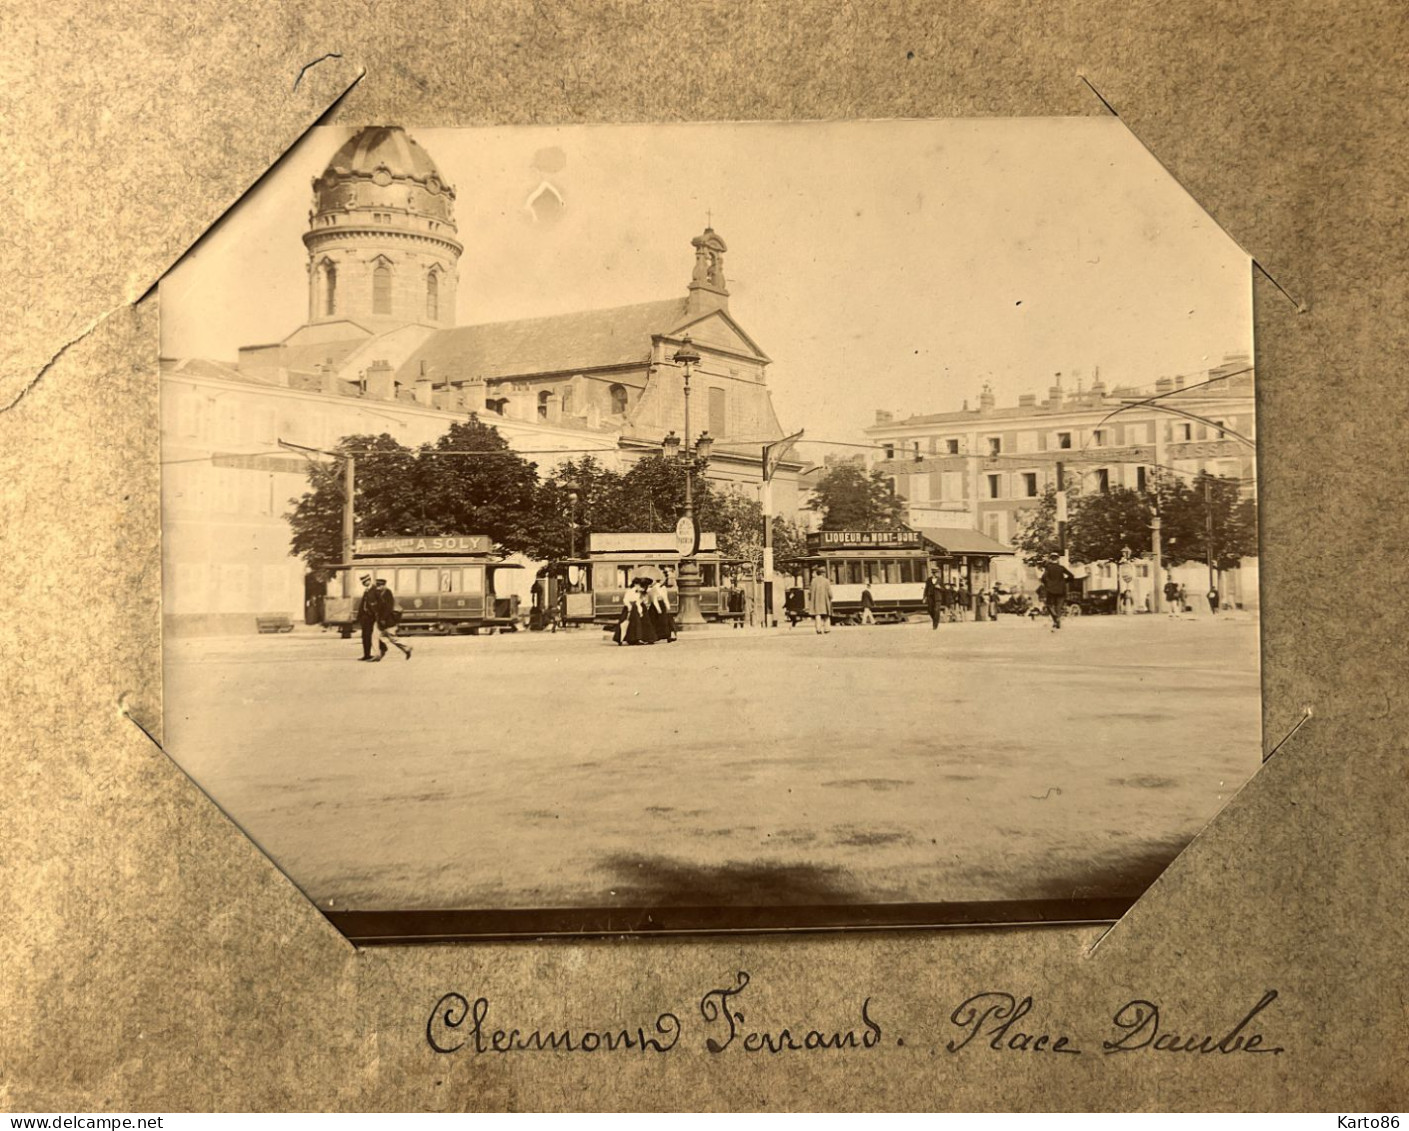 Clermont Ferrand * Le Tram Tramway , Place Daube * Photo Circa 1890/1910 11.5x8.5cm - Clermont Ferrand